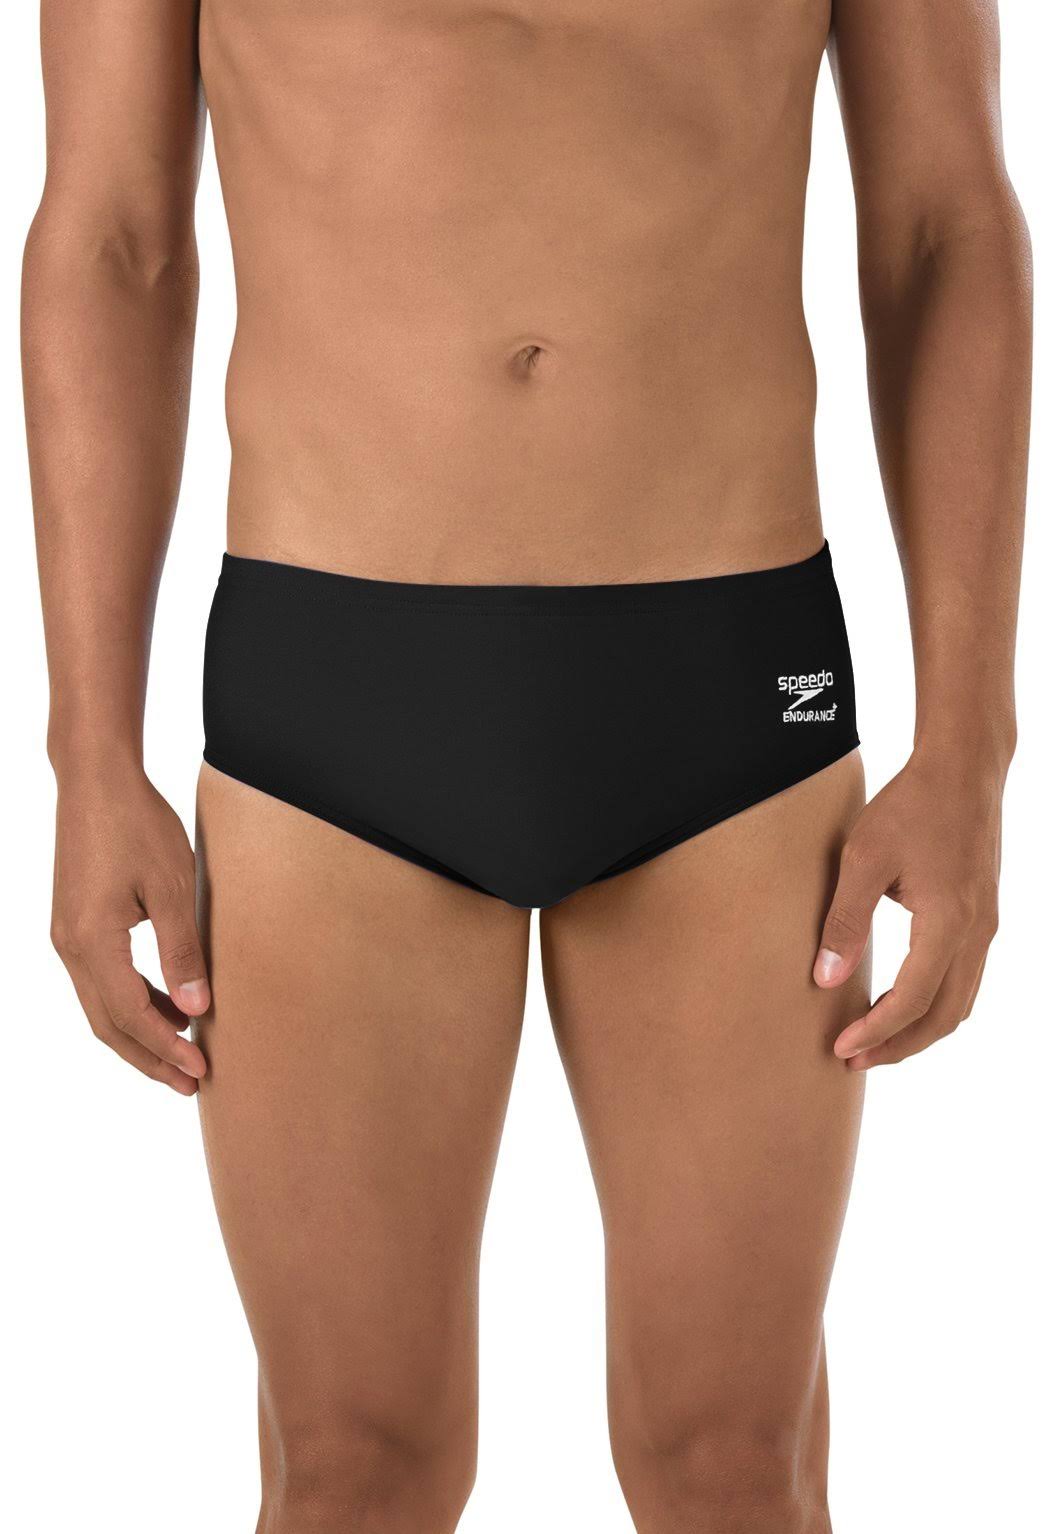 Speedo Men's Endurance+ Solid Brief Swimsuit - Black, SIze 38